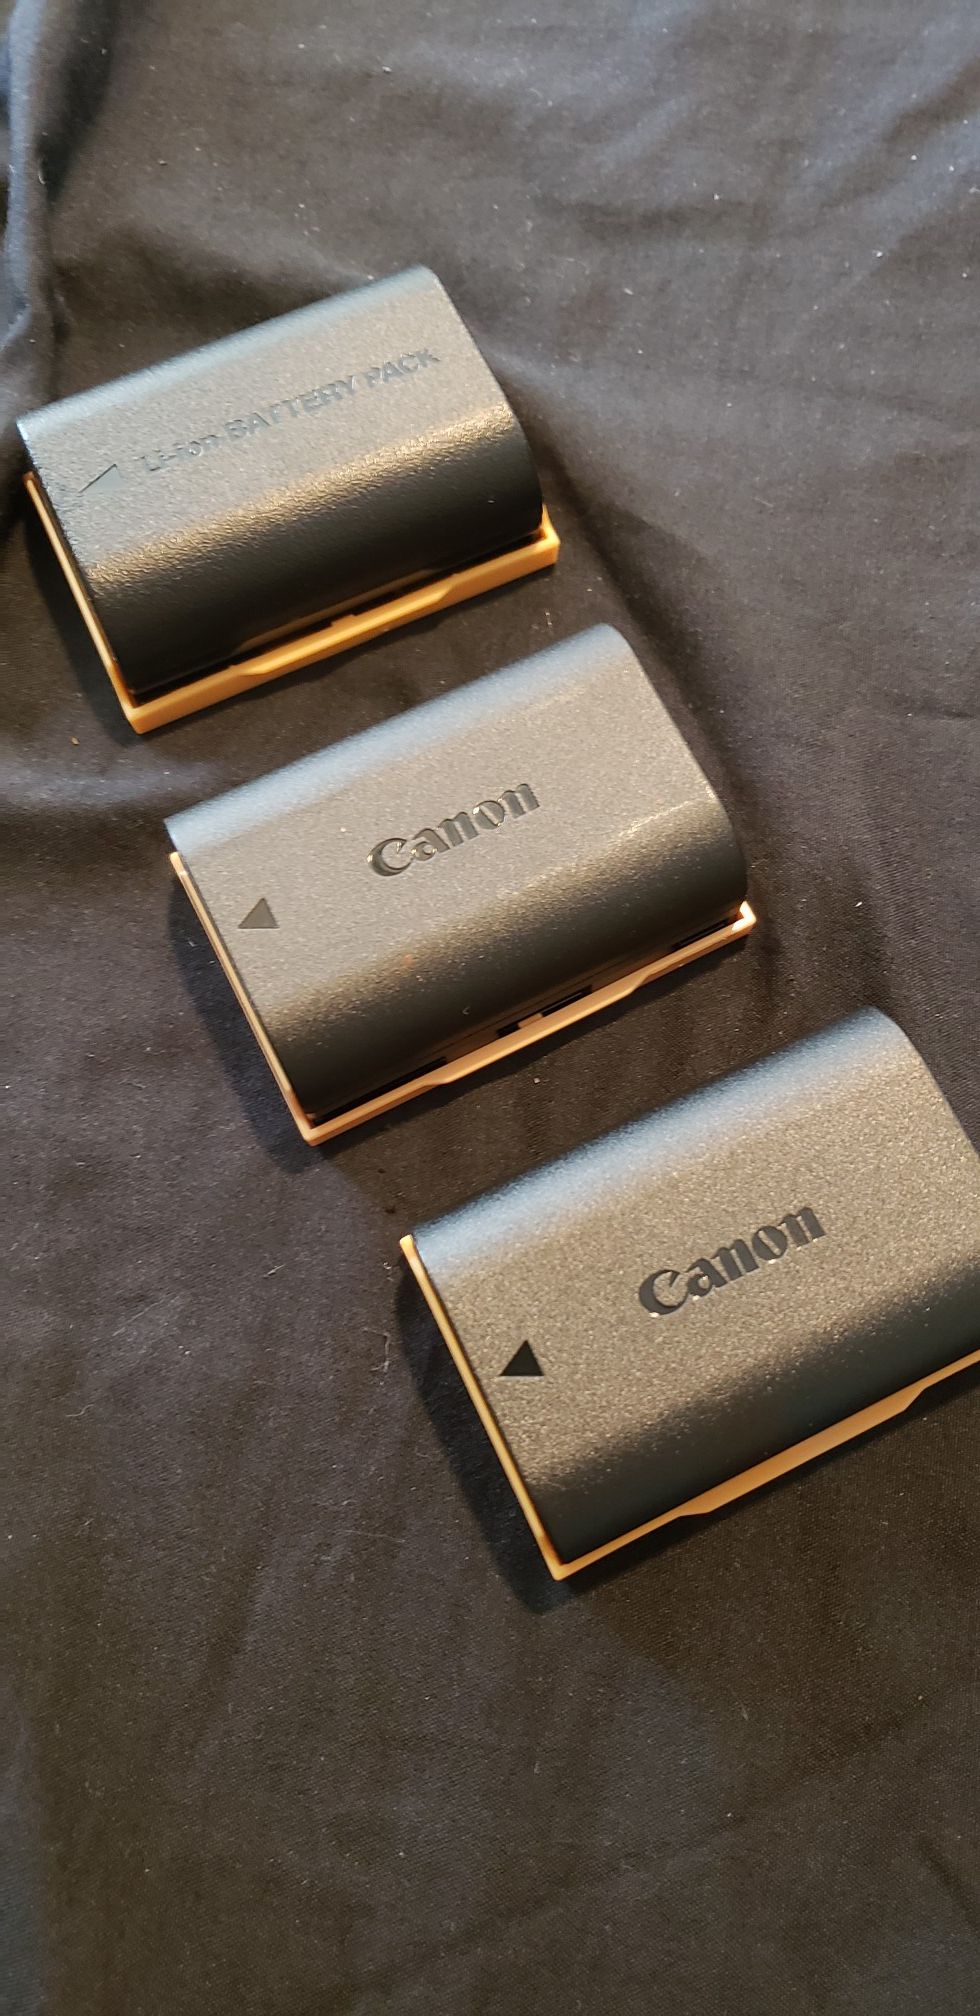 2 Canon LP-E6N batteries and 1 Watson Brand LP-E6N Battery for Canon with Canon LC-E6 battery charger